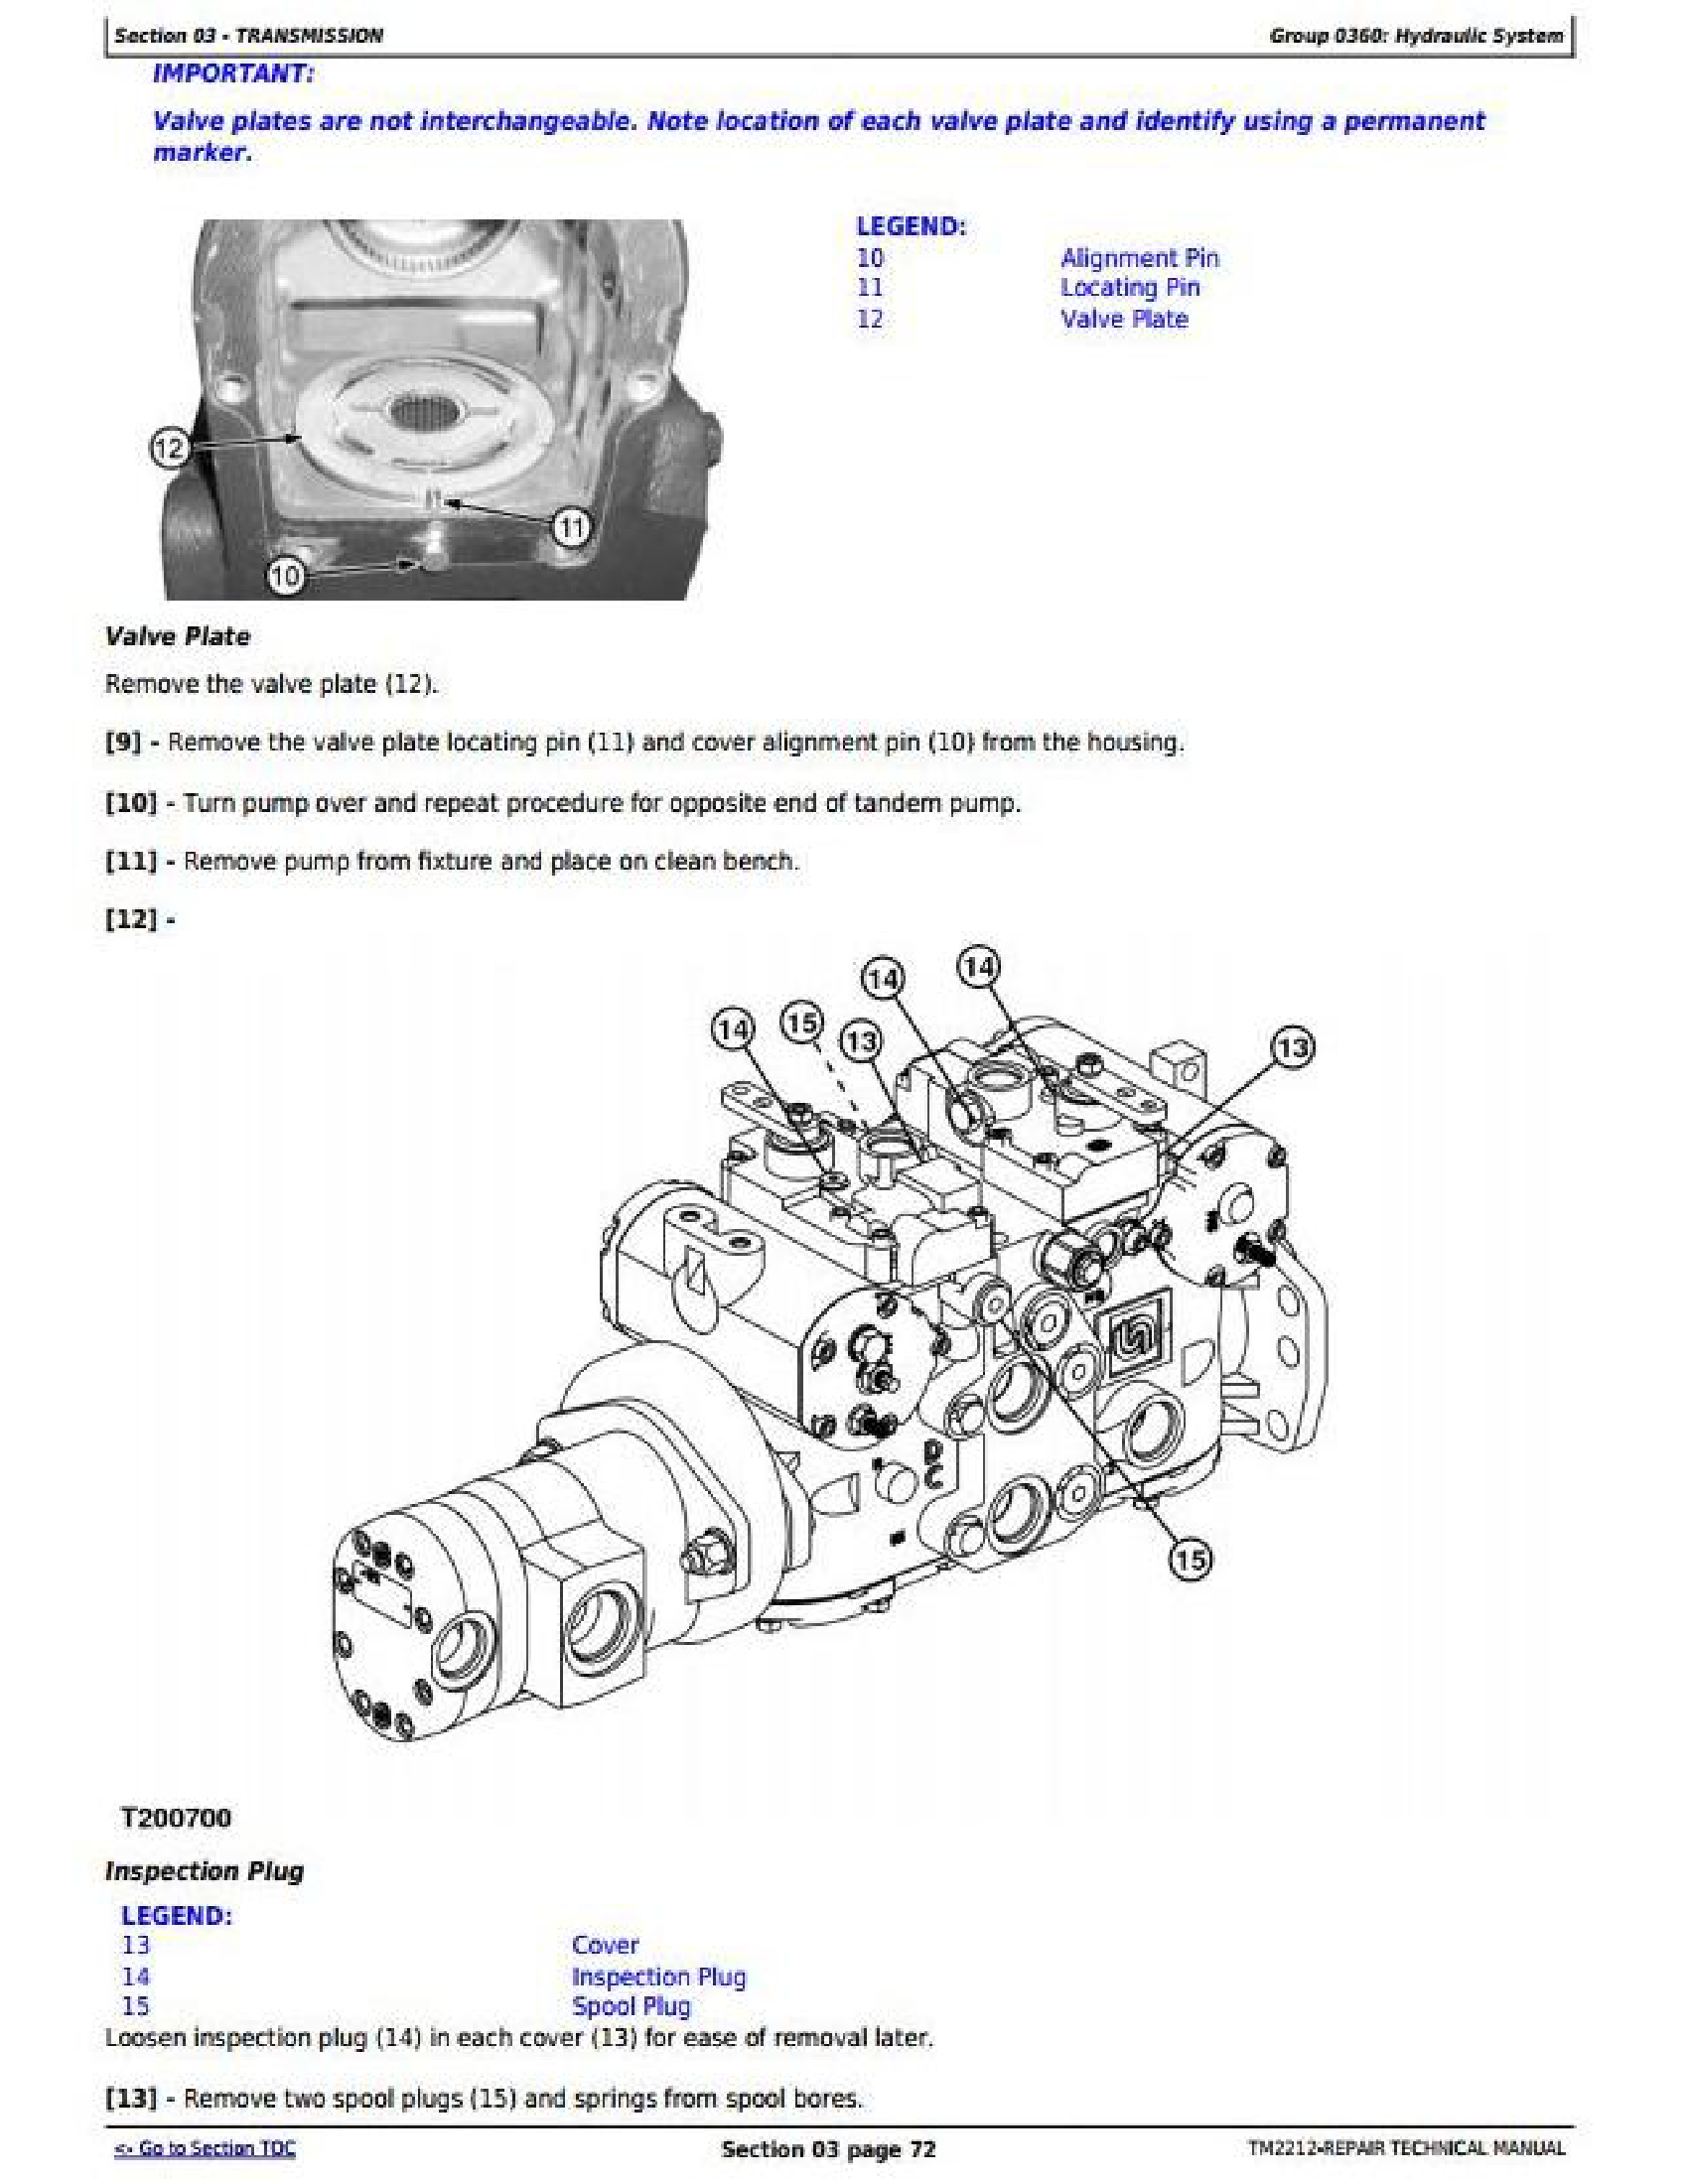 John Deere 50D manual pdf